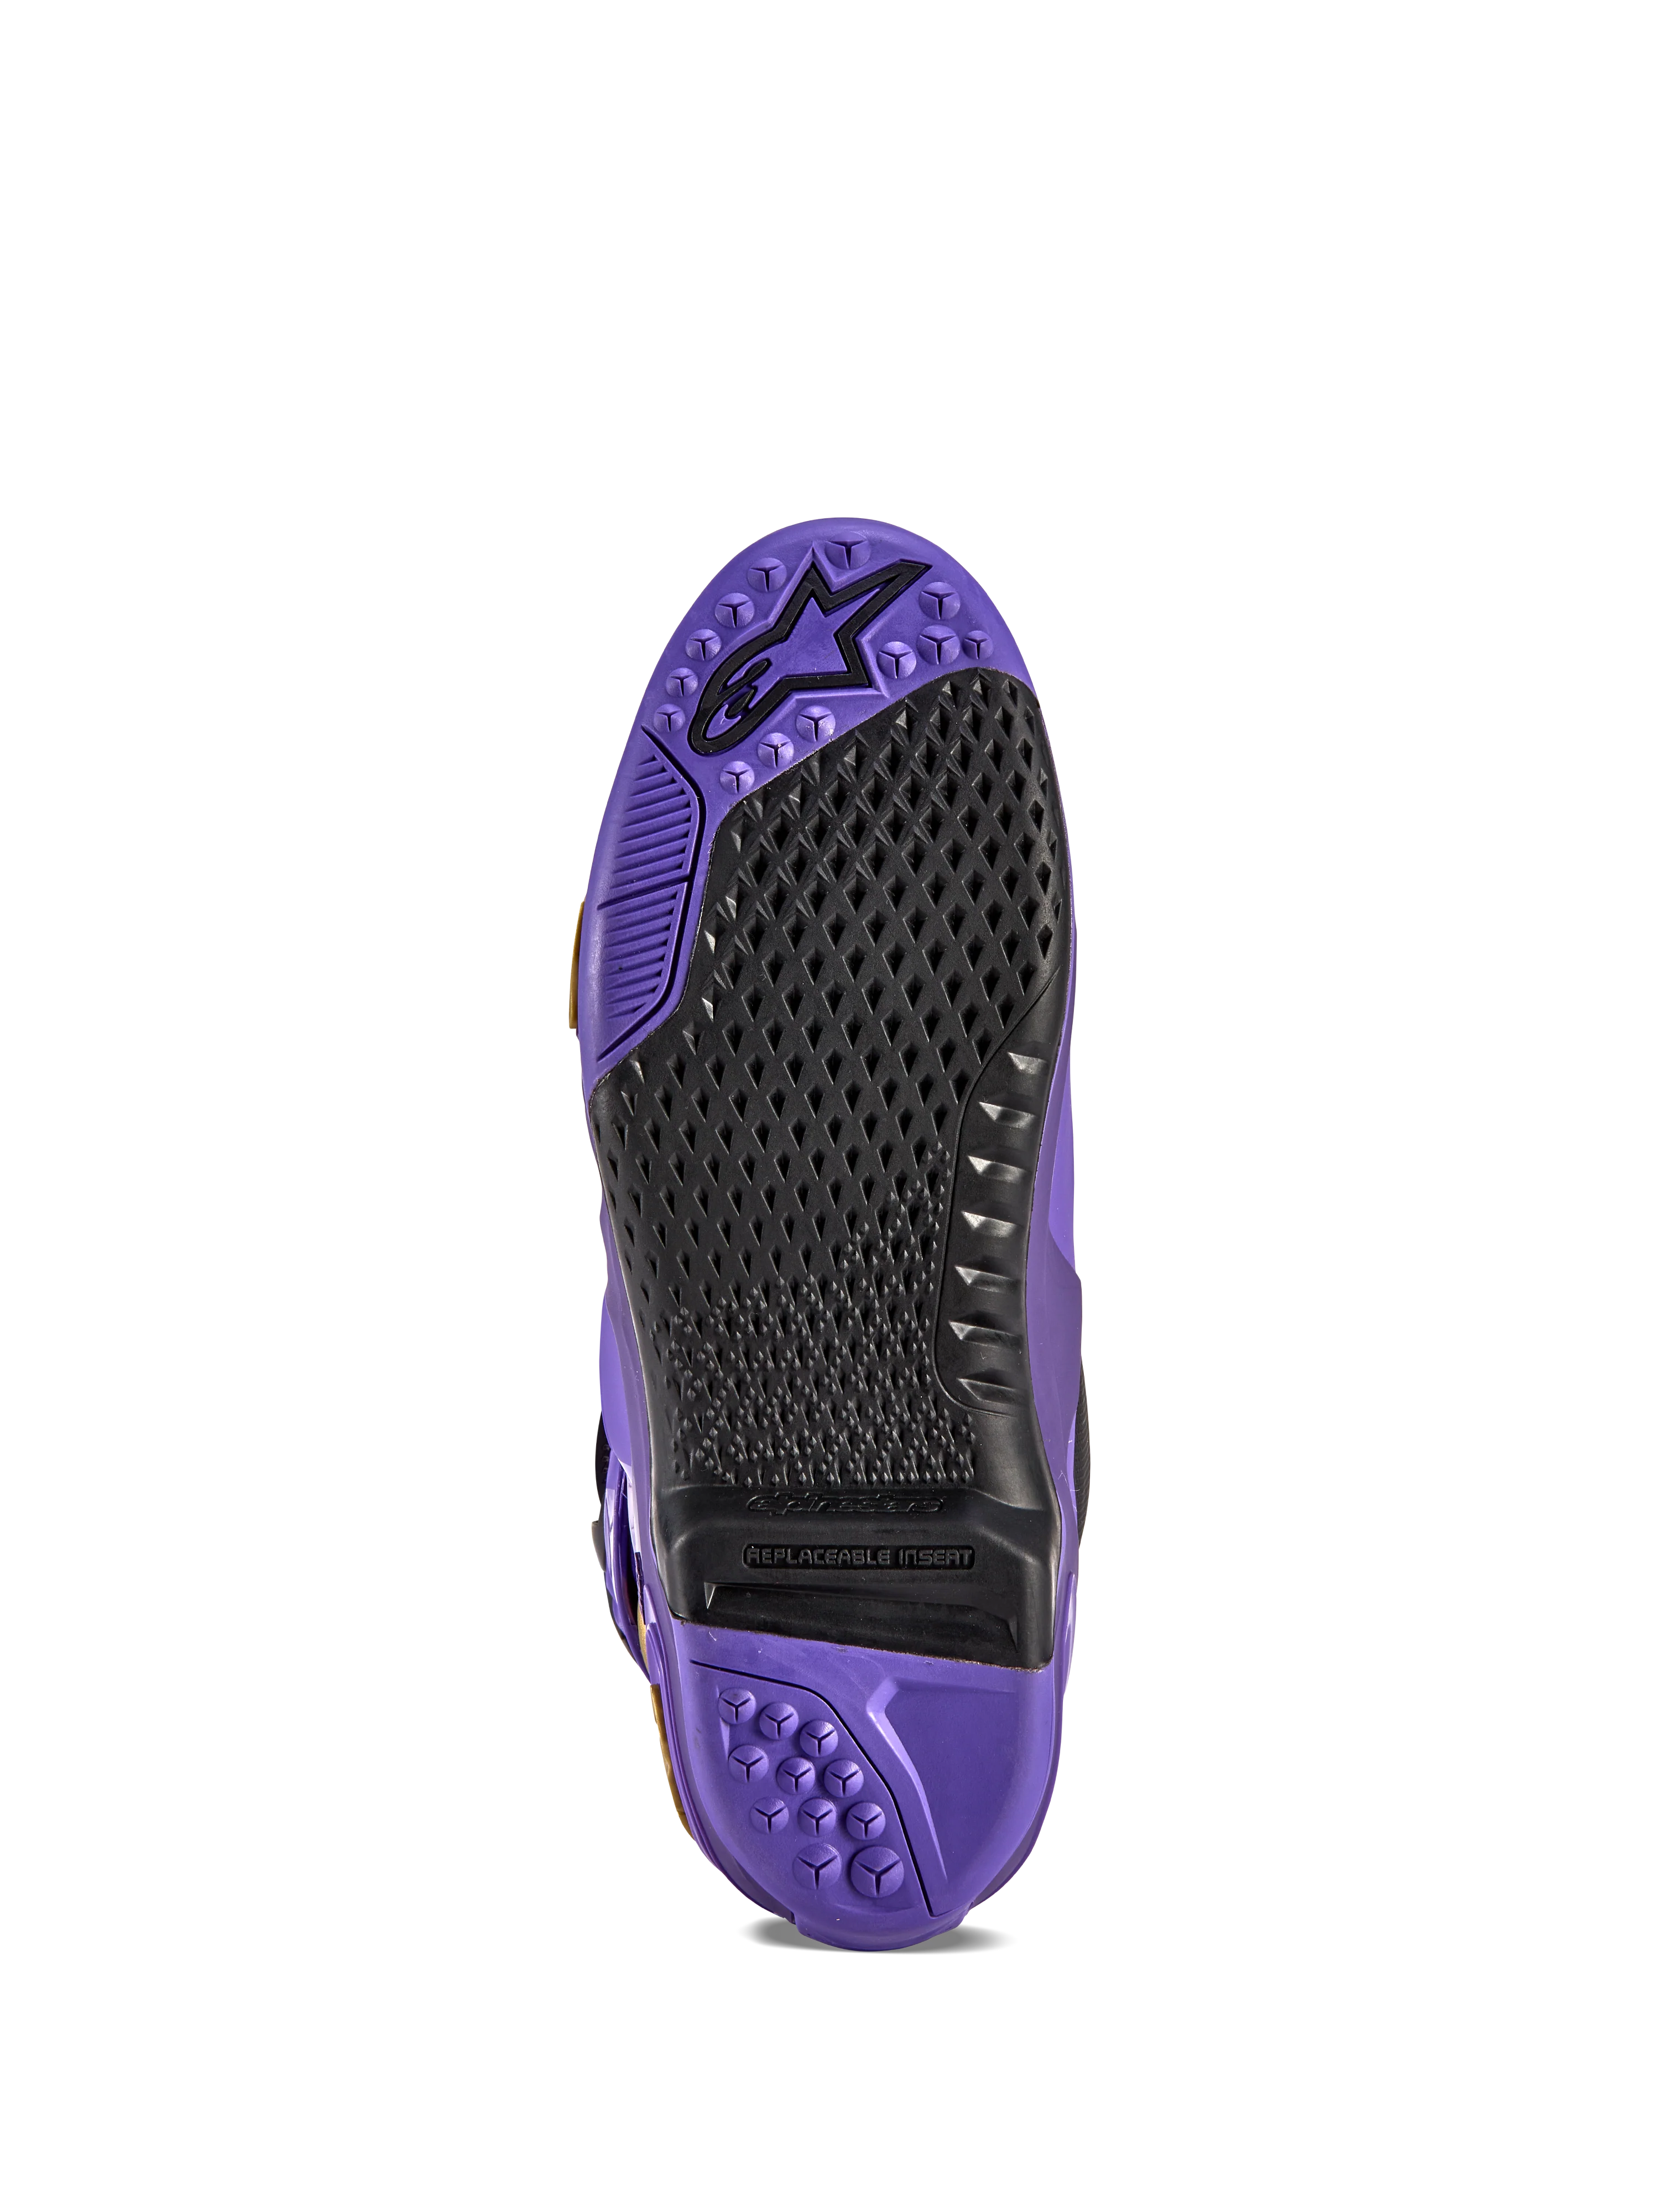 Alpinestars Tech 10 Champ LE Boots - Ultraviolet/Gold/Black